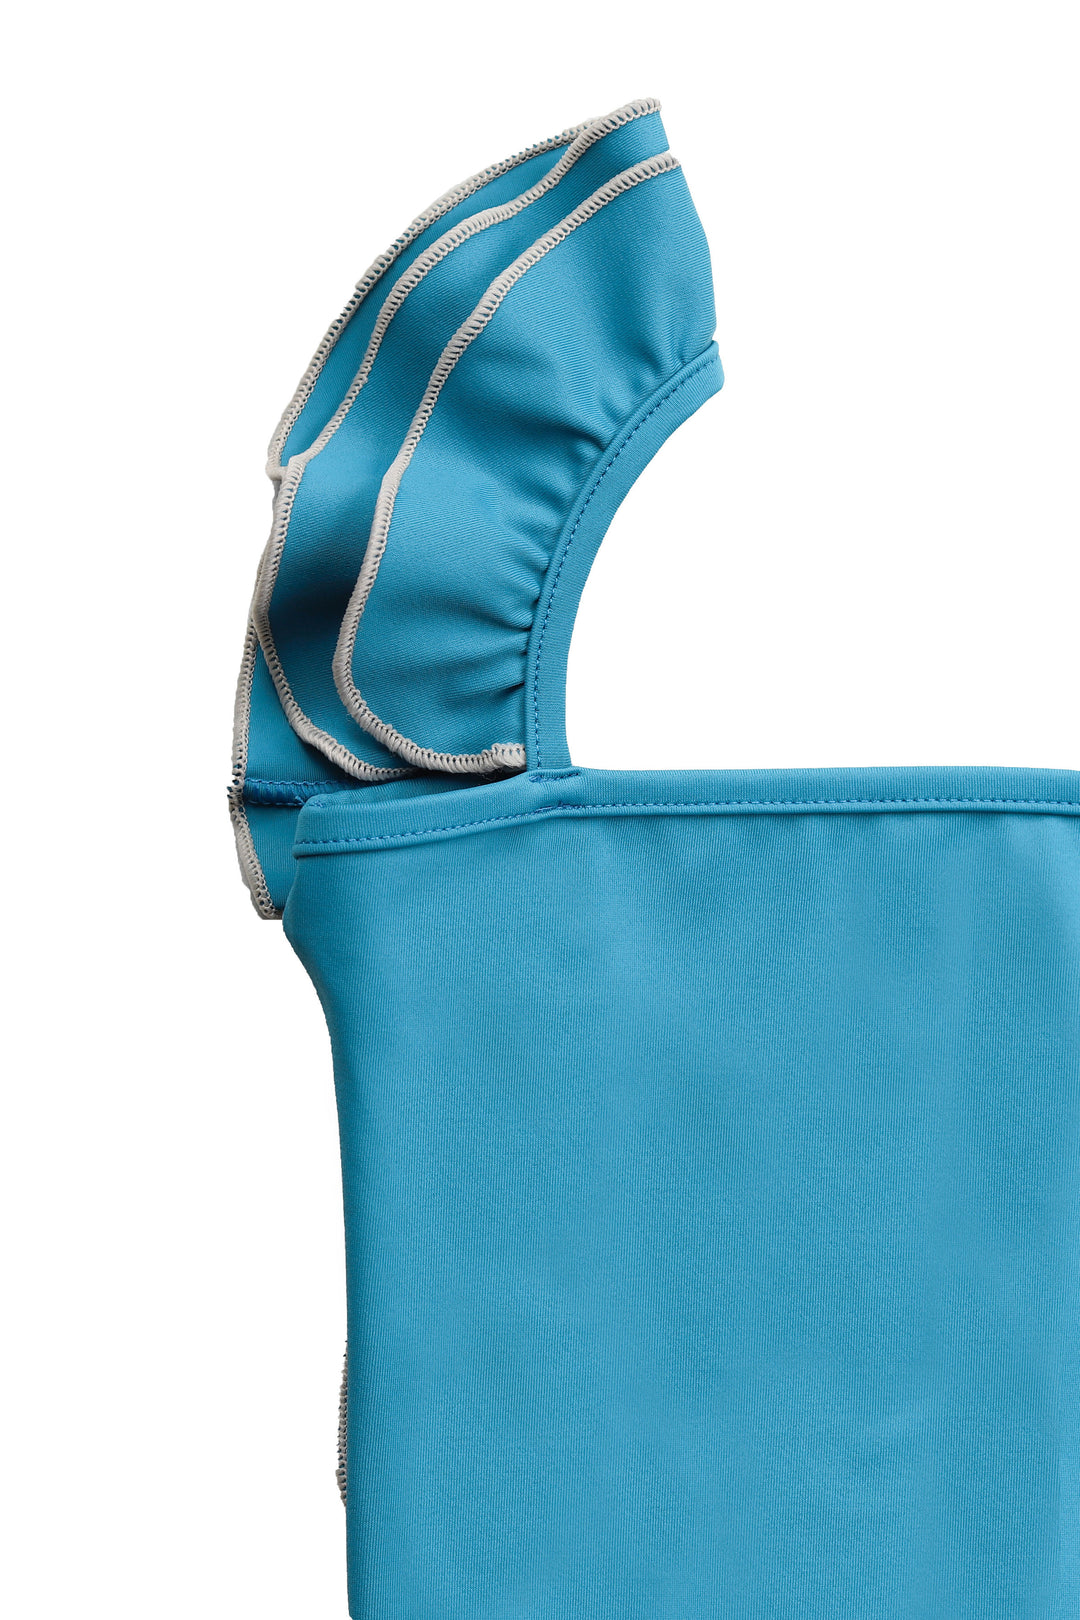 Swimsuit Valentina Sky Blue - ملابس السباحة